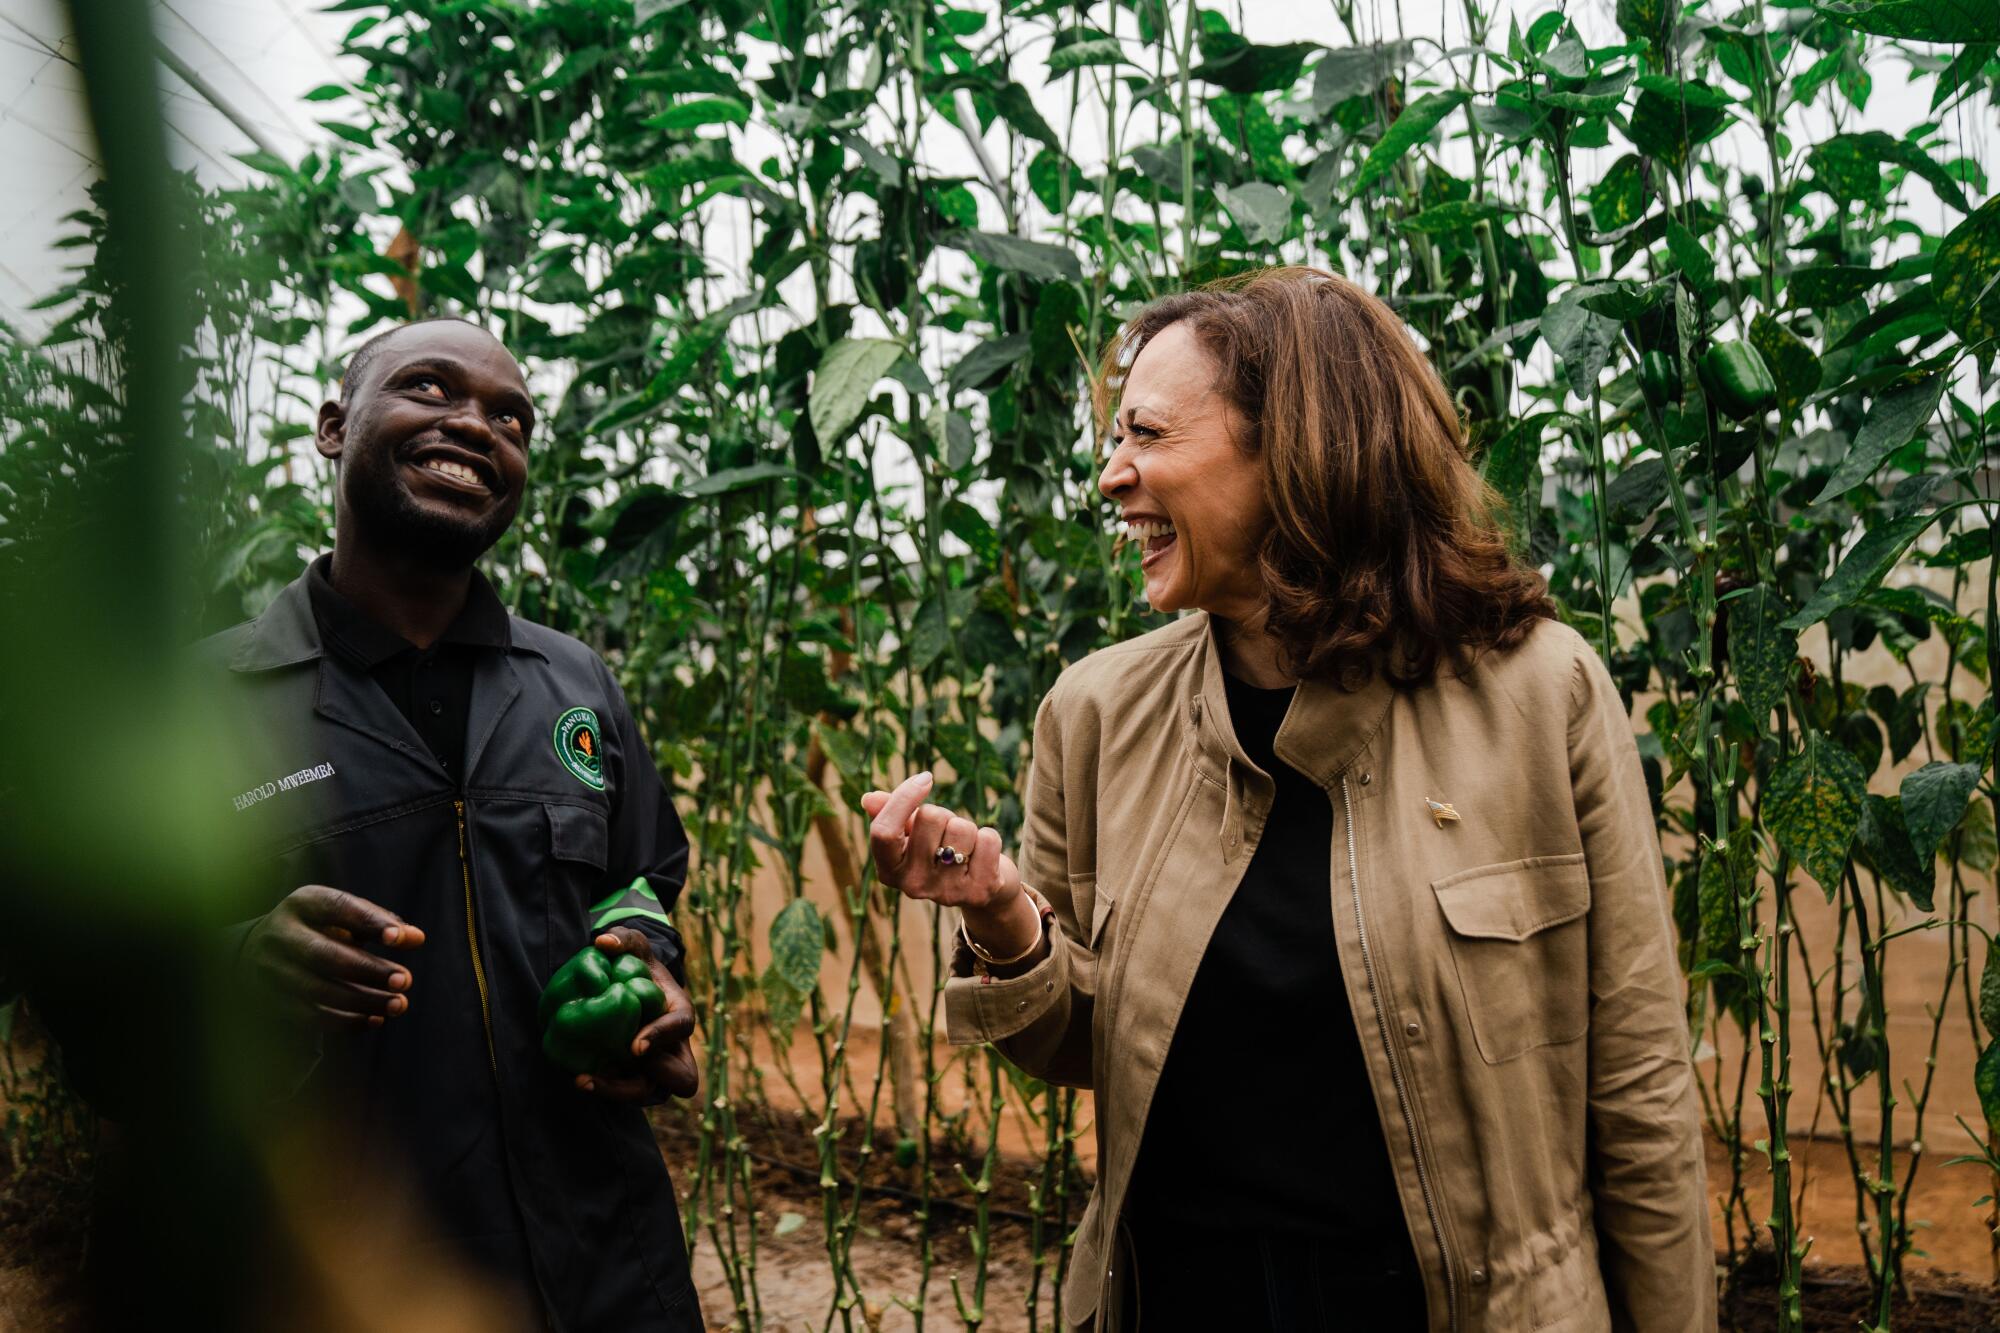 Vice President Kamala Harris speaks with a man while touring a farm.